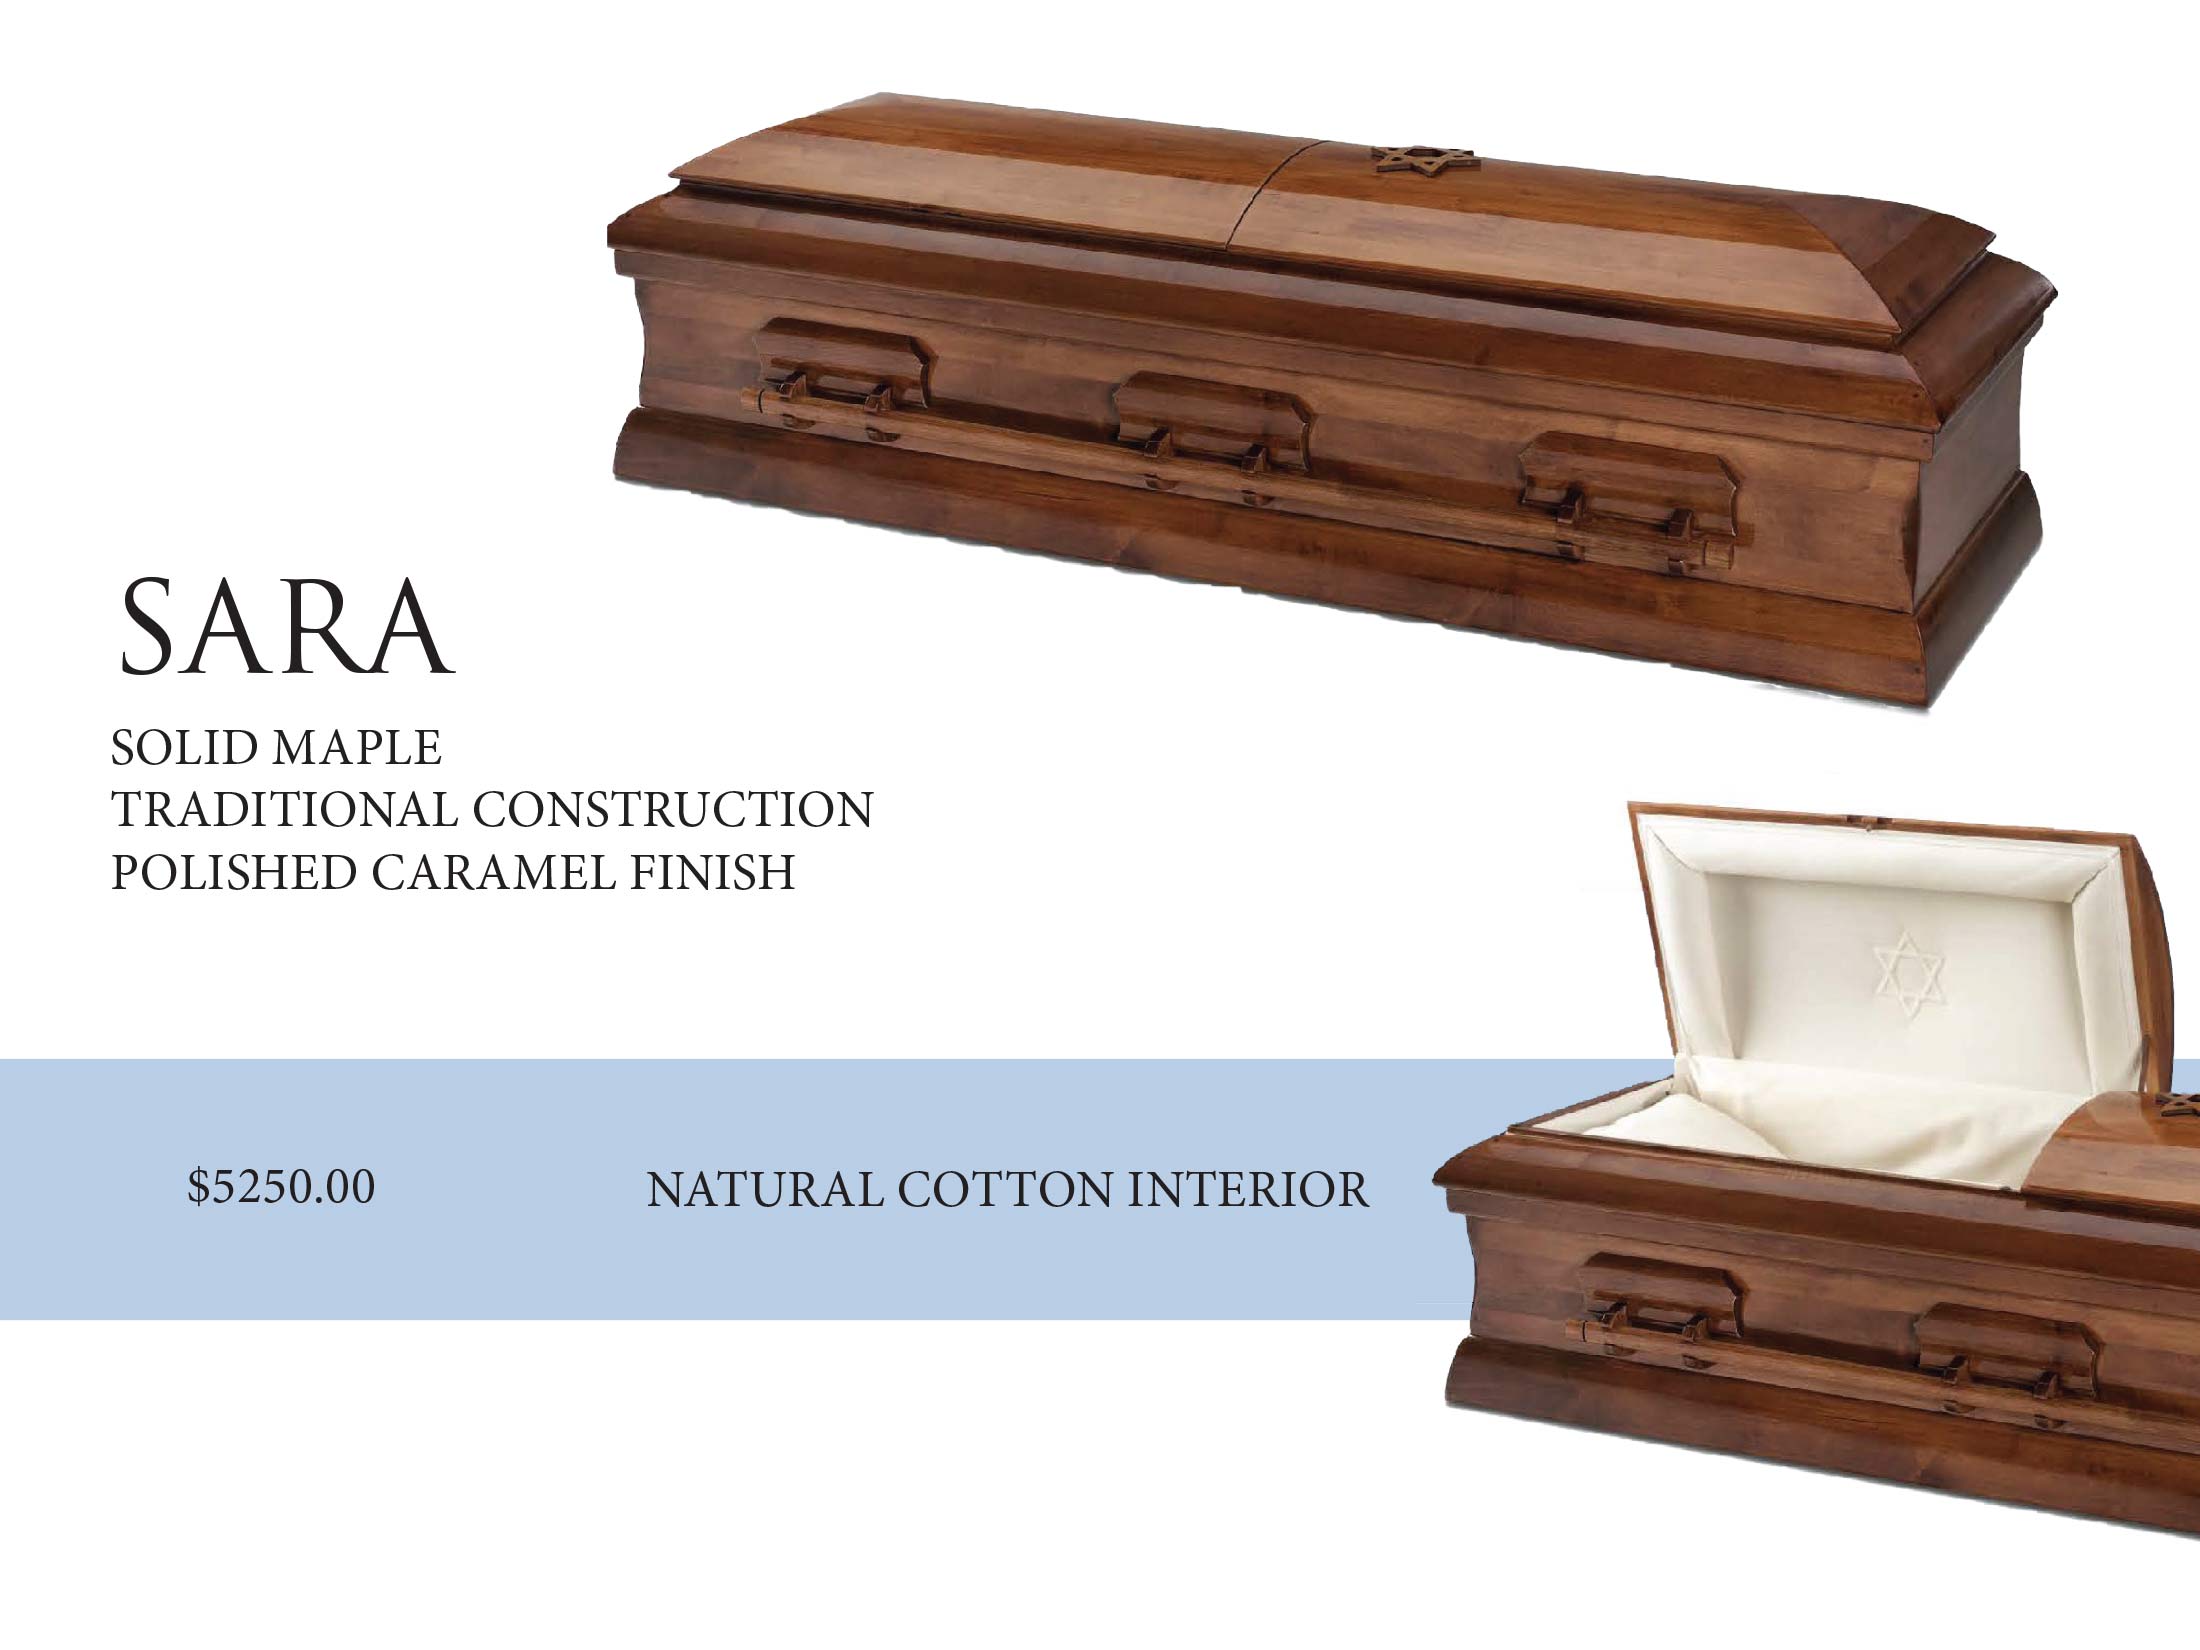 Sara - Solid Maple Traditional Construction Polished Caramel Finish - $5250.00 - Natural Cotton Interior